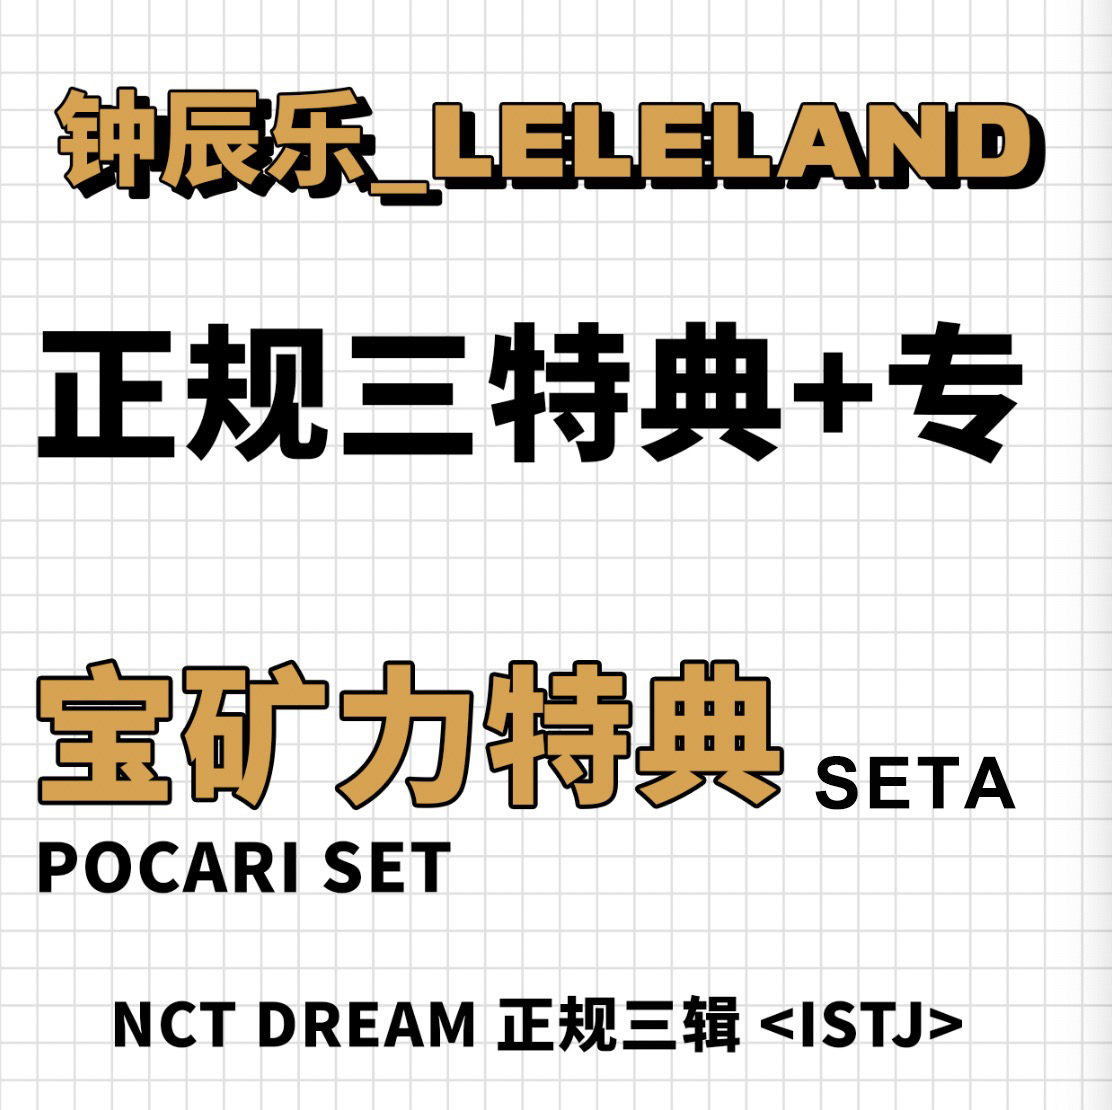 [全款 宝矿力seta特典专] NCT DREAM - 正规3辑 [ISTJ]_钟辰乐吧_ChenLeBar